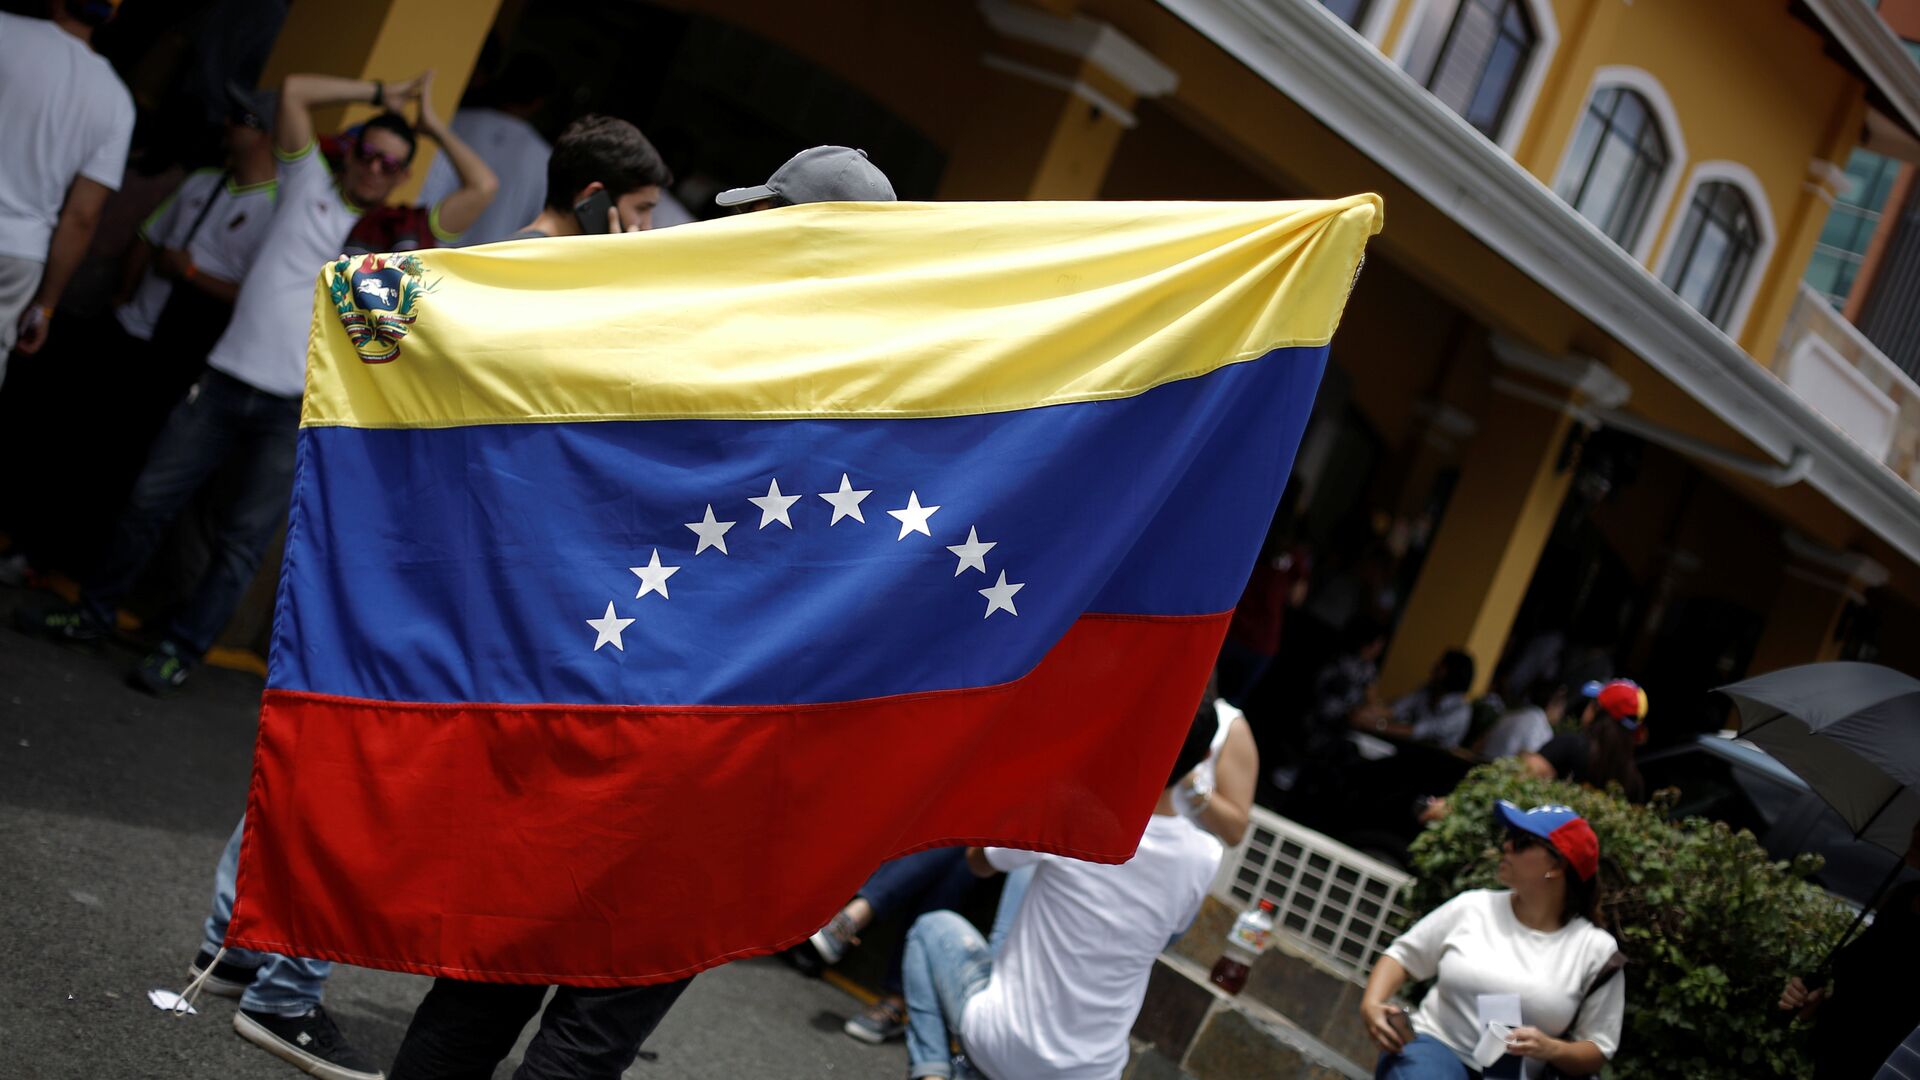 Bandera de Venezuela (imagen referencial) - Sputnik Mundo, 1920, 23.08.2021